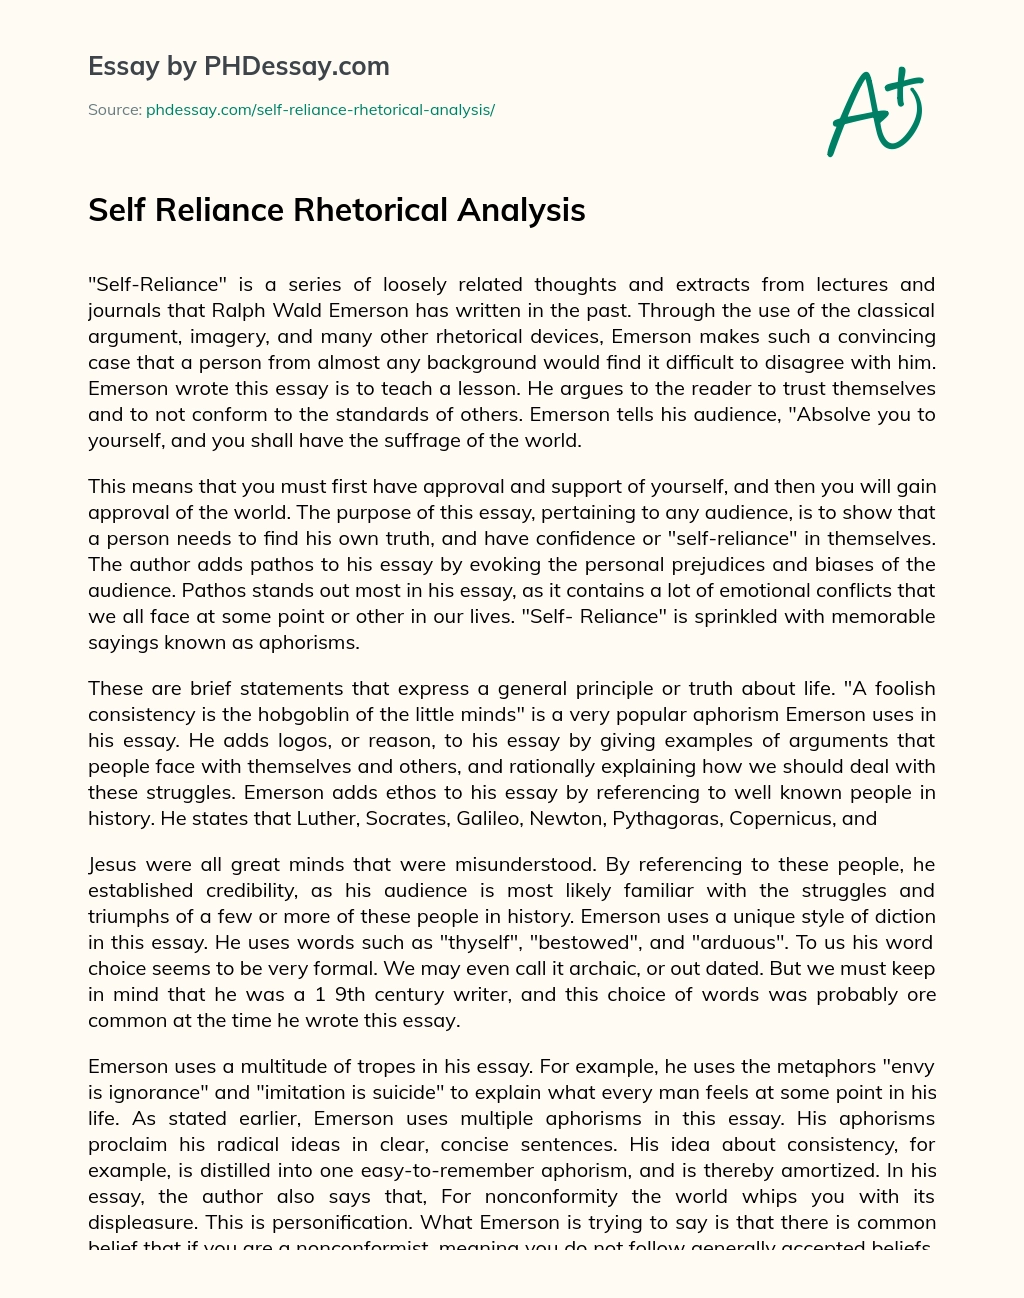 Self Reliance Rhetorical Analysis essay